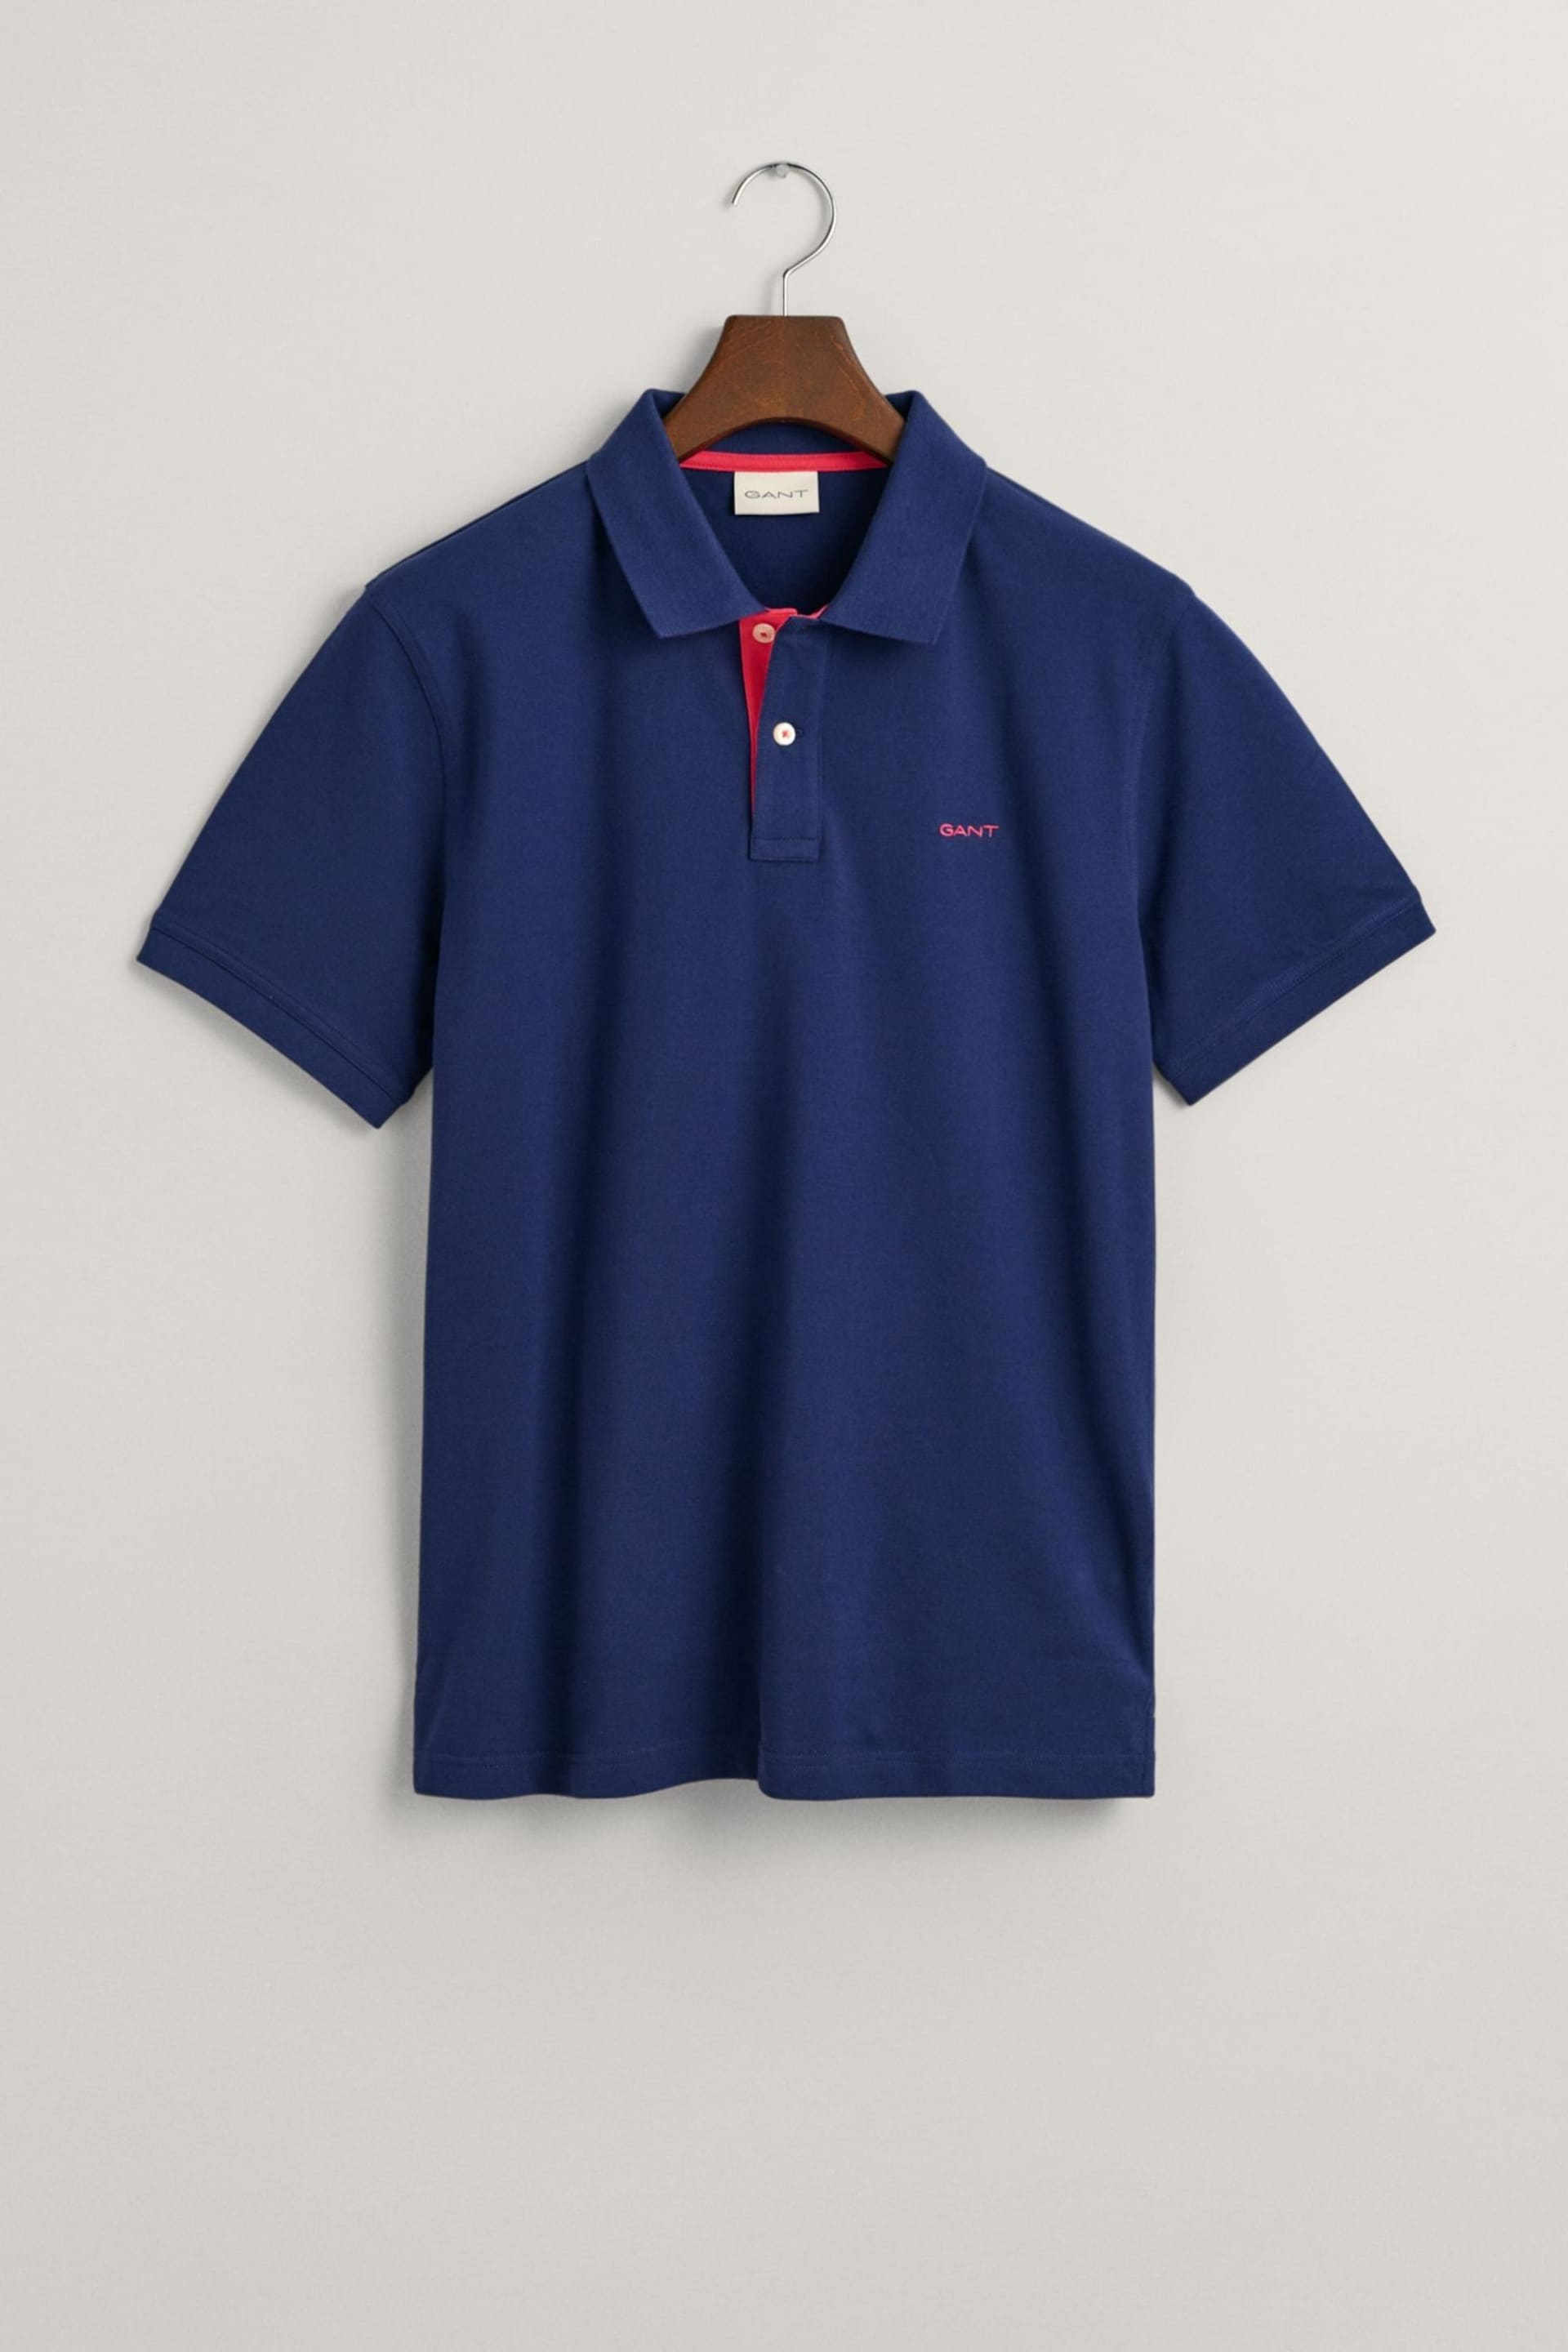 GANT Contrast Collar Polo Shirt - Image 5 of 6